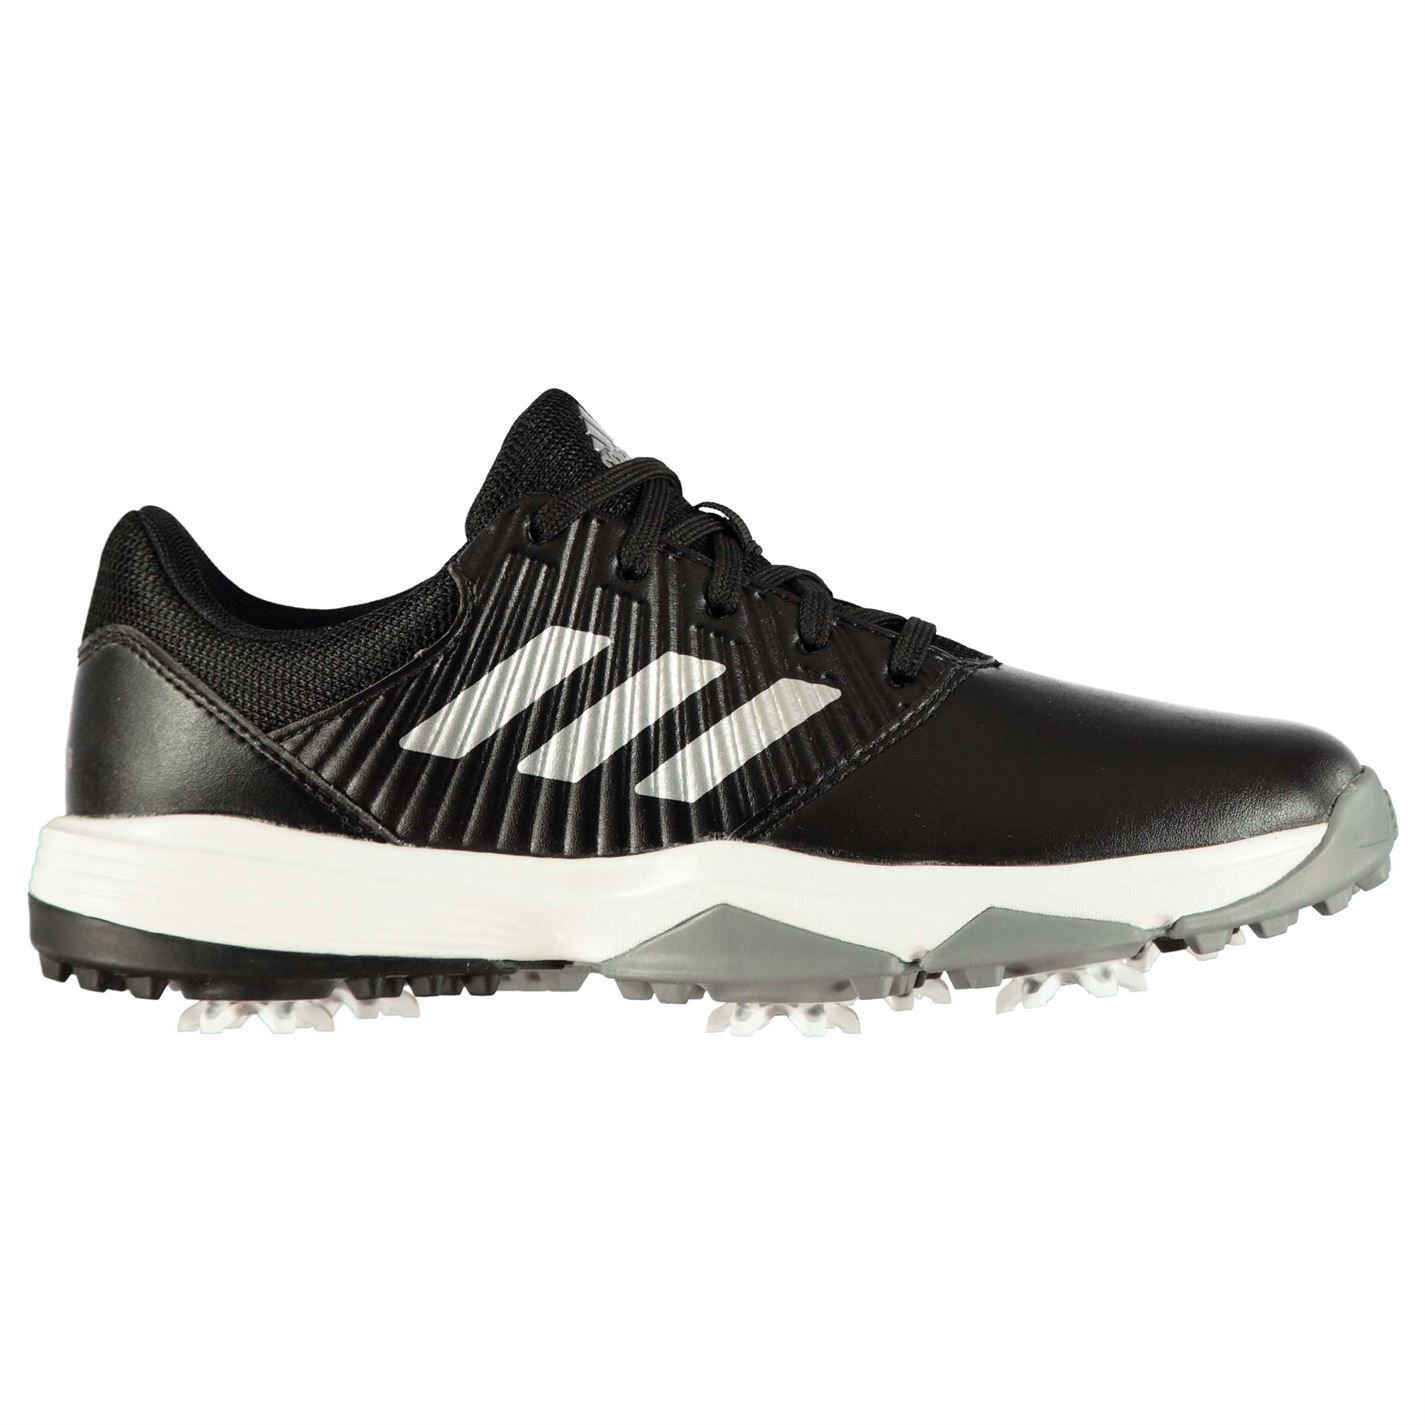 Chaussures de golf junior Adidas CP Traxion Junior Chaussures de Golf Core Black/Silver Metal/White UK 3